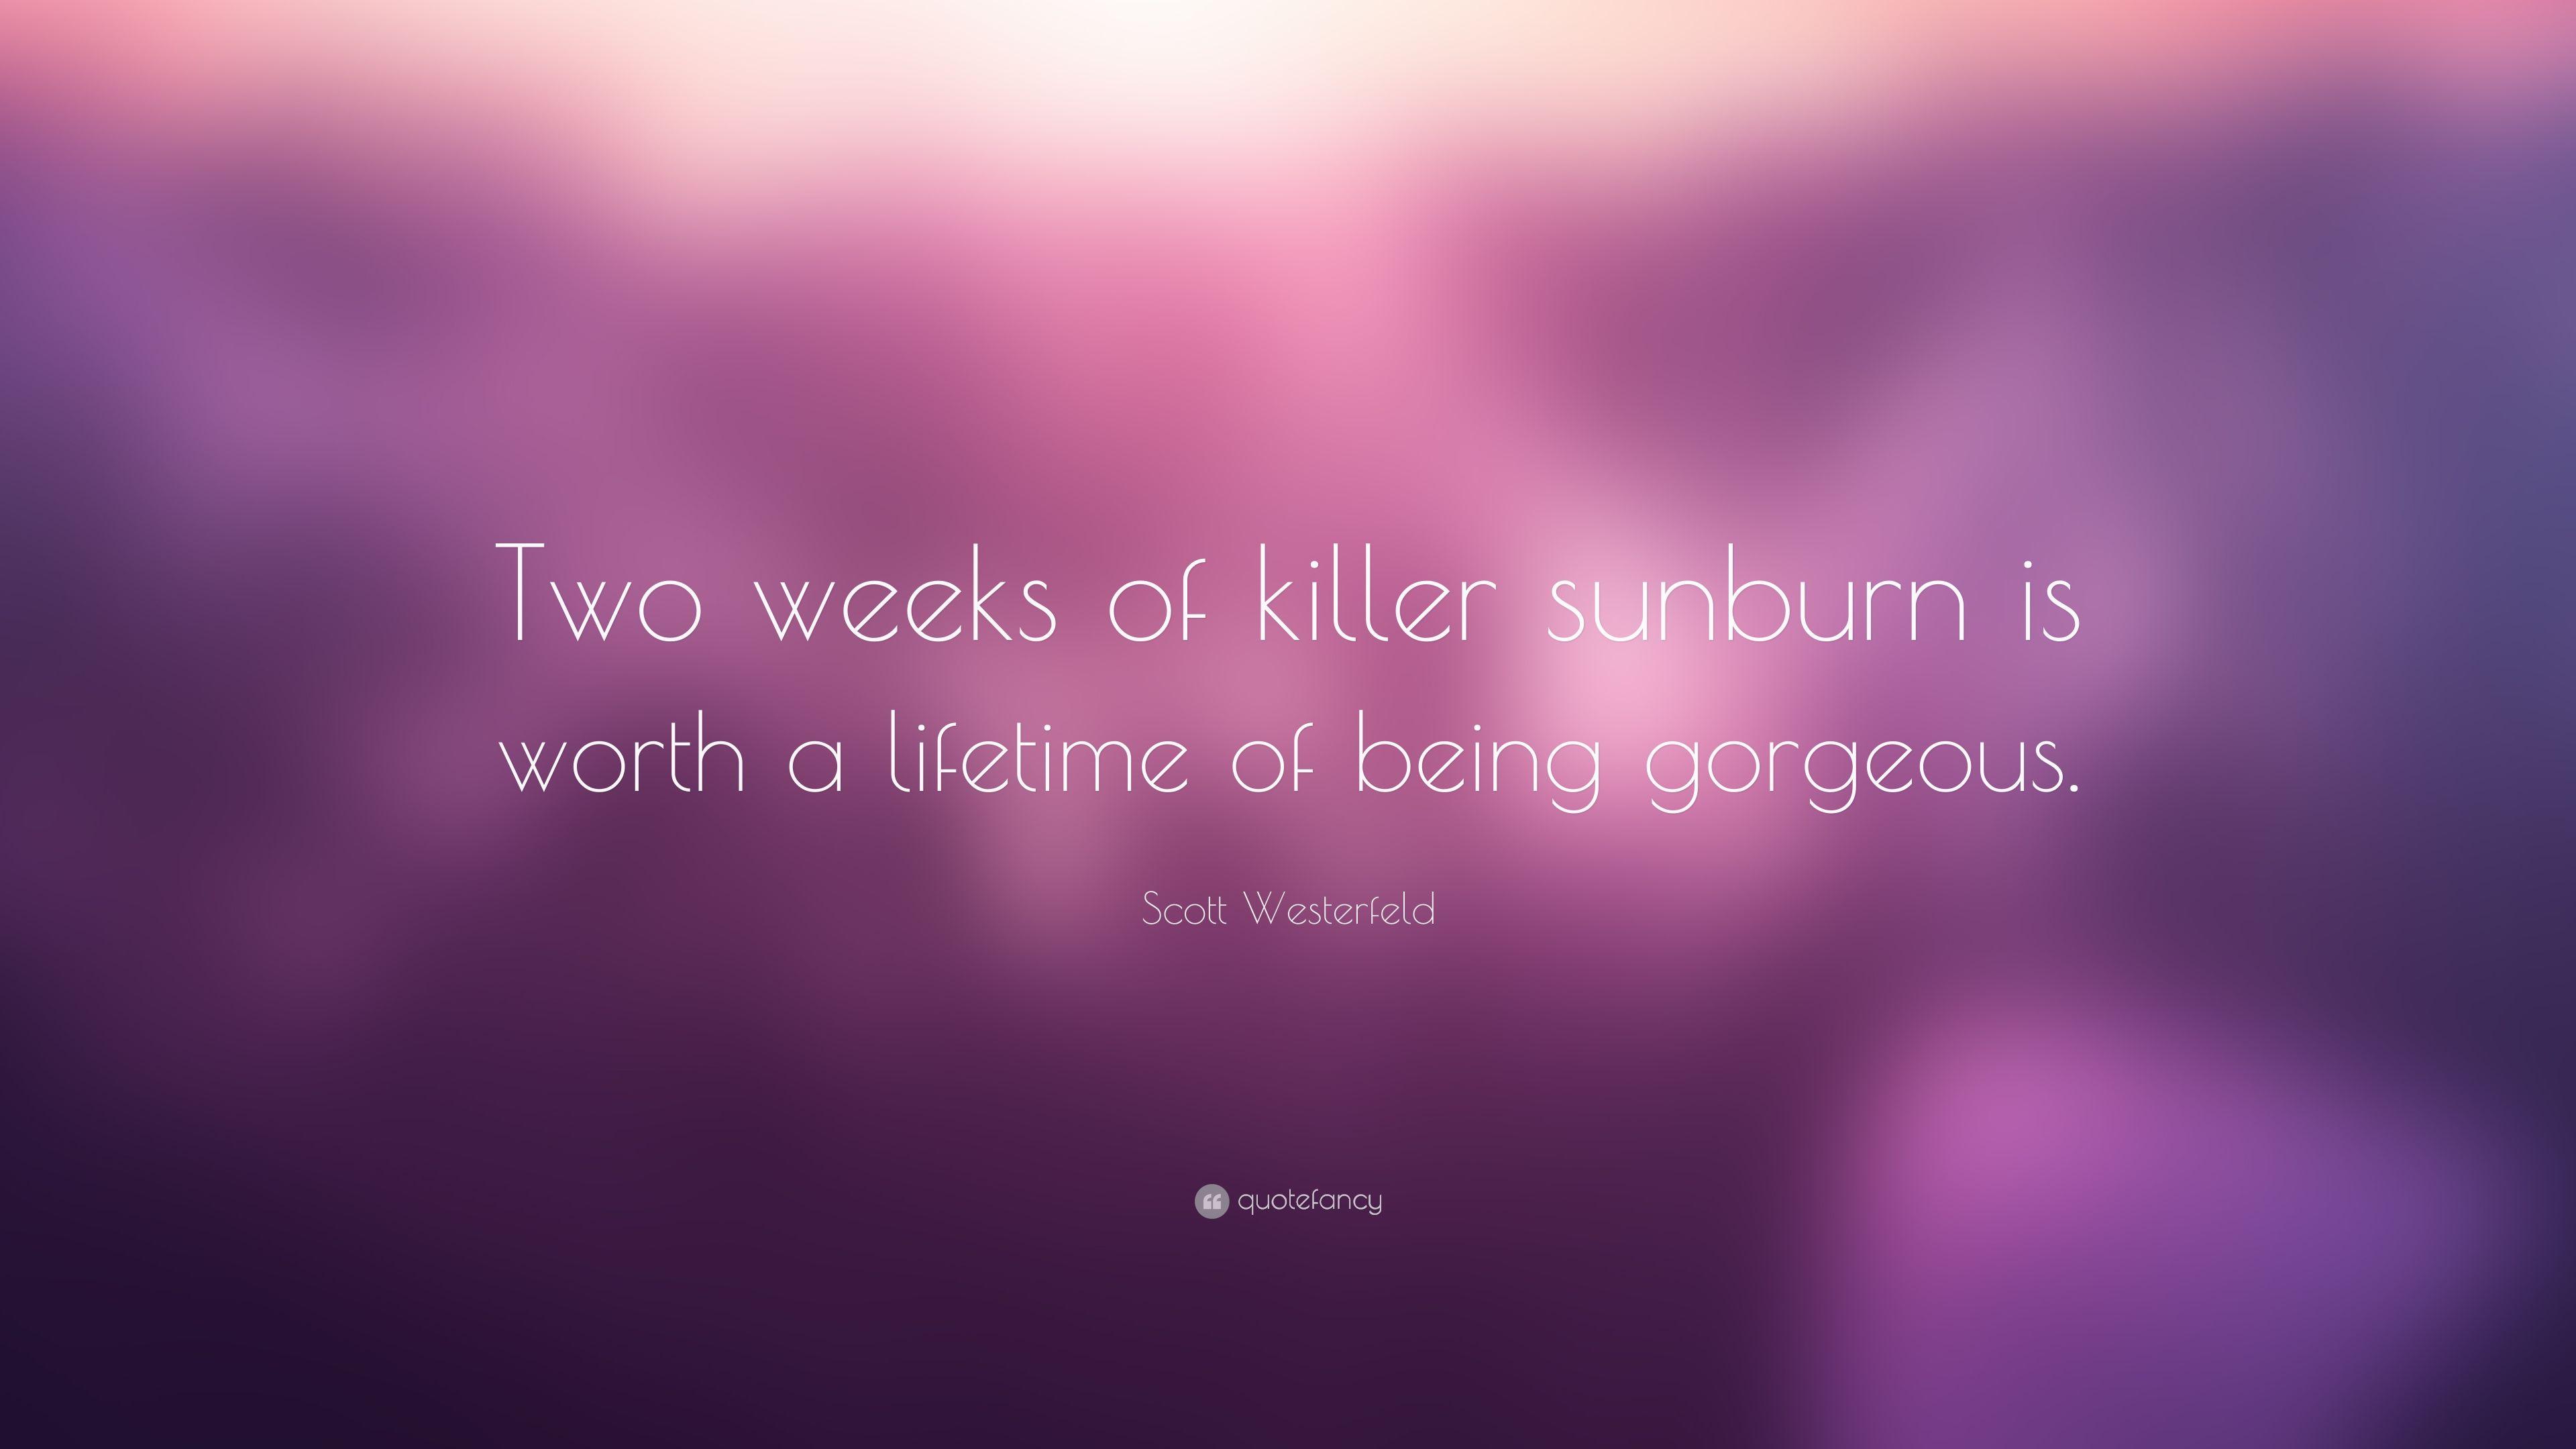 Scott Westerfeld Quote: “Two weeks of killer sunburn is worth a